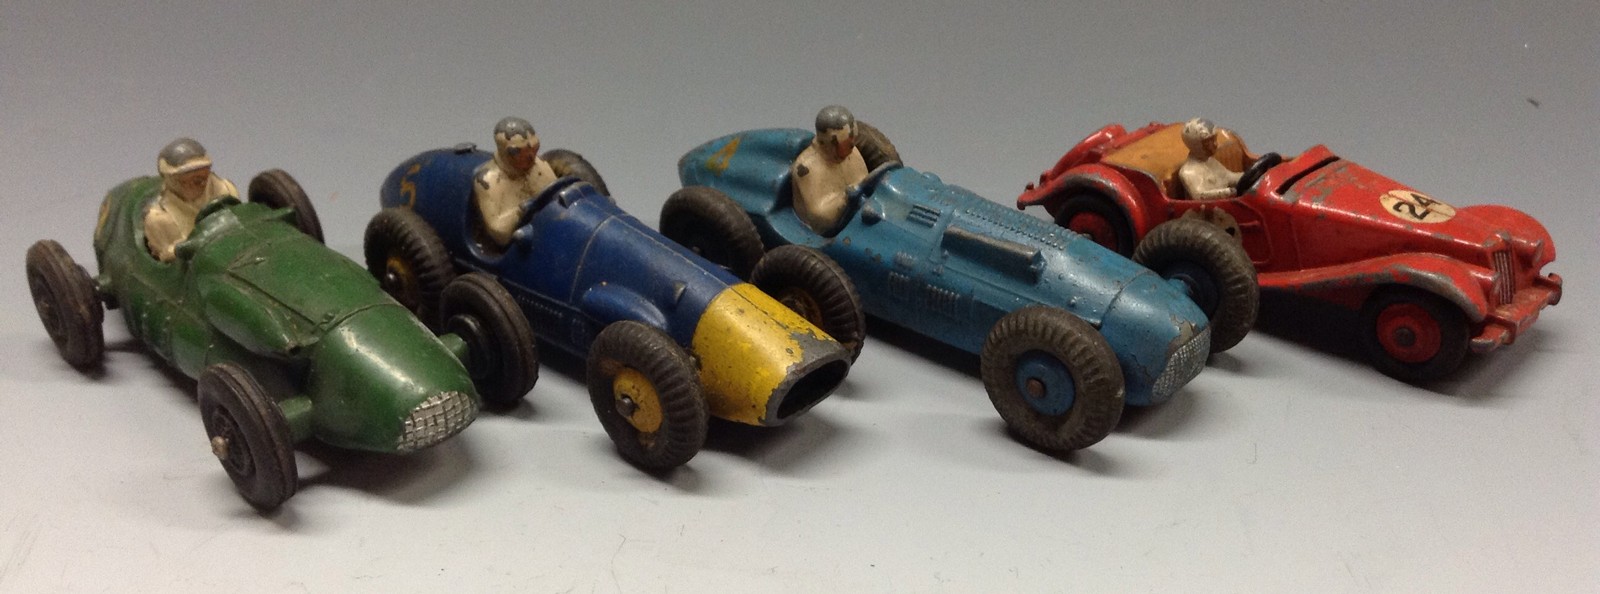 Dinky Toys 230 Talbot-Lago Racing Car, light blue body, white driver figure,